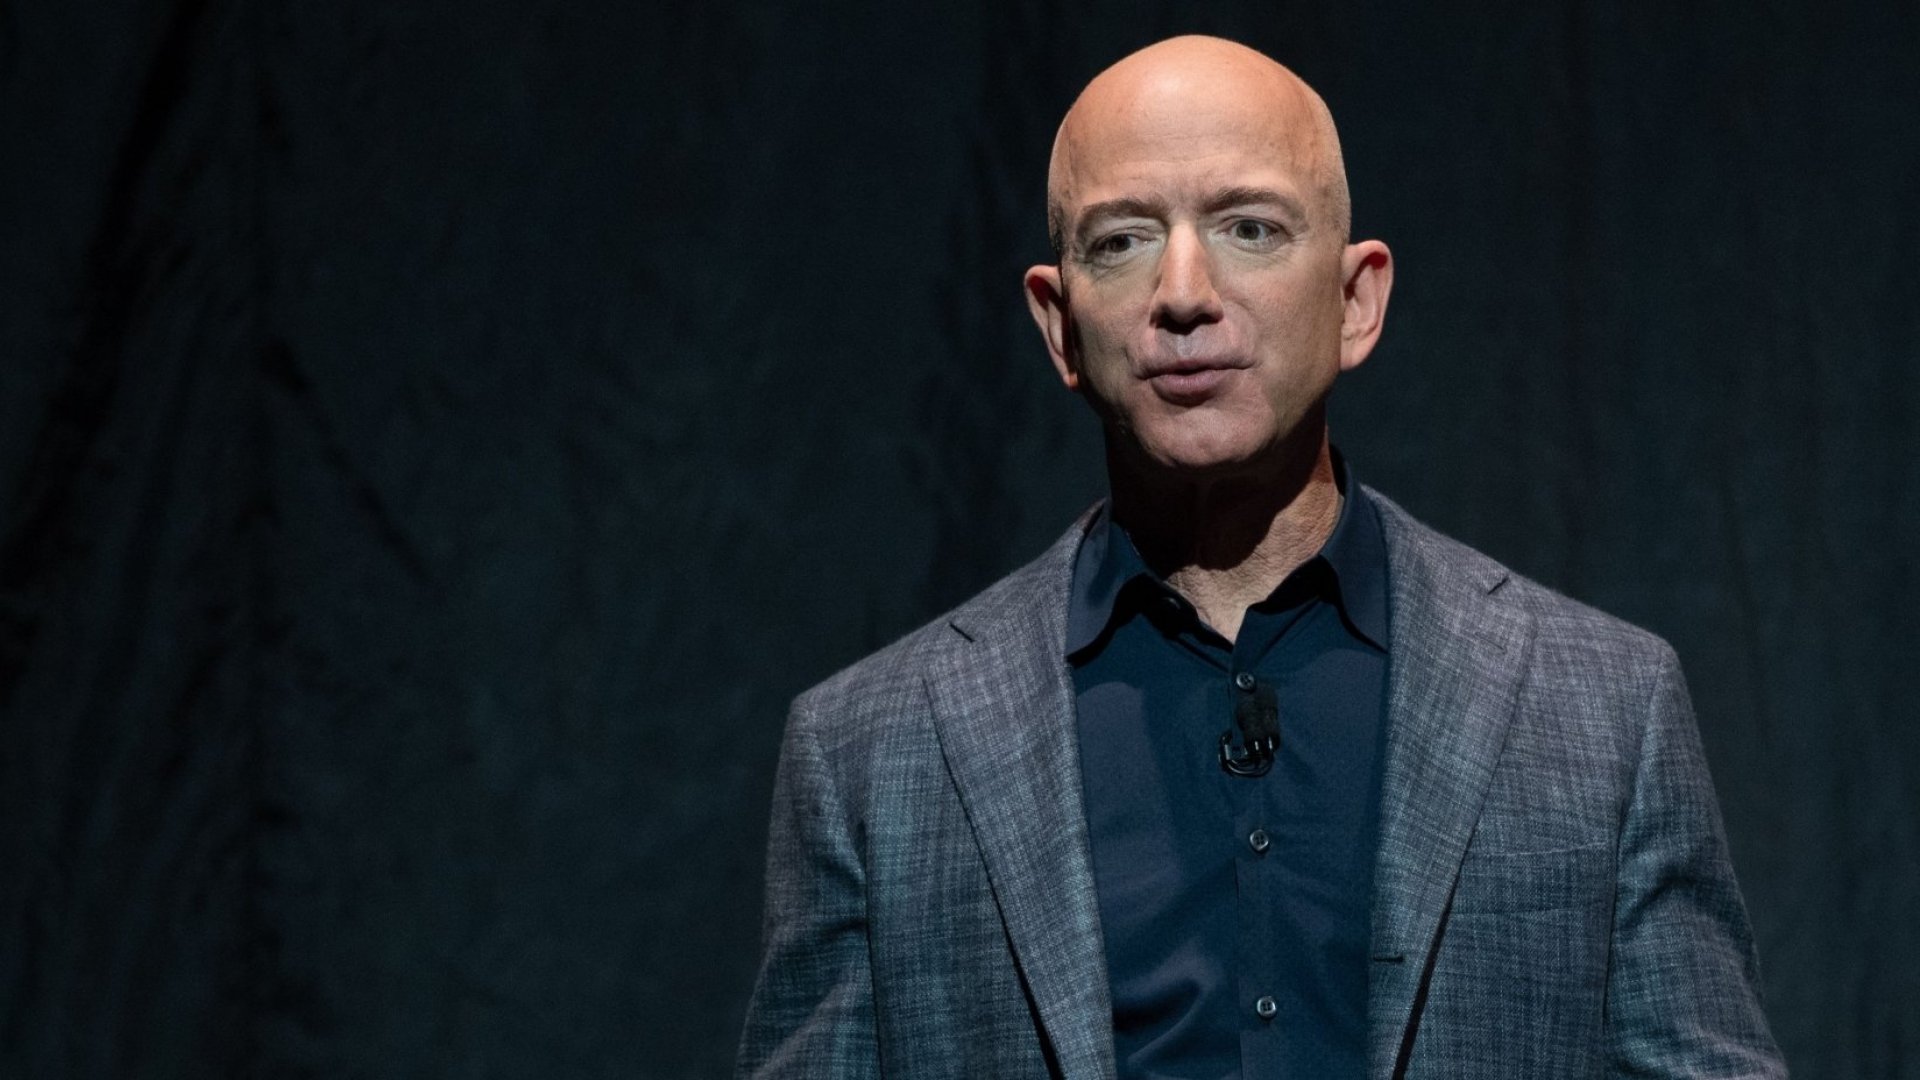 Amazon CEO’su Jeff Bezos Görevini Bırakıyor